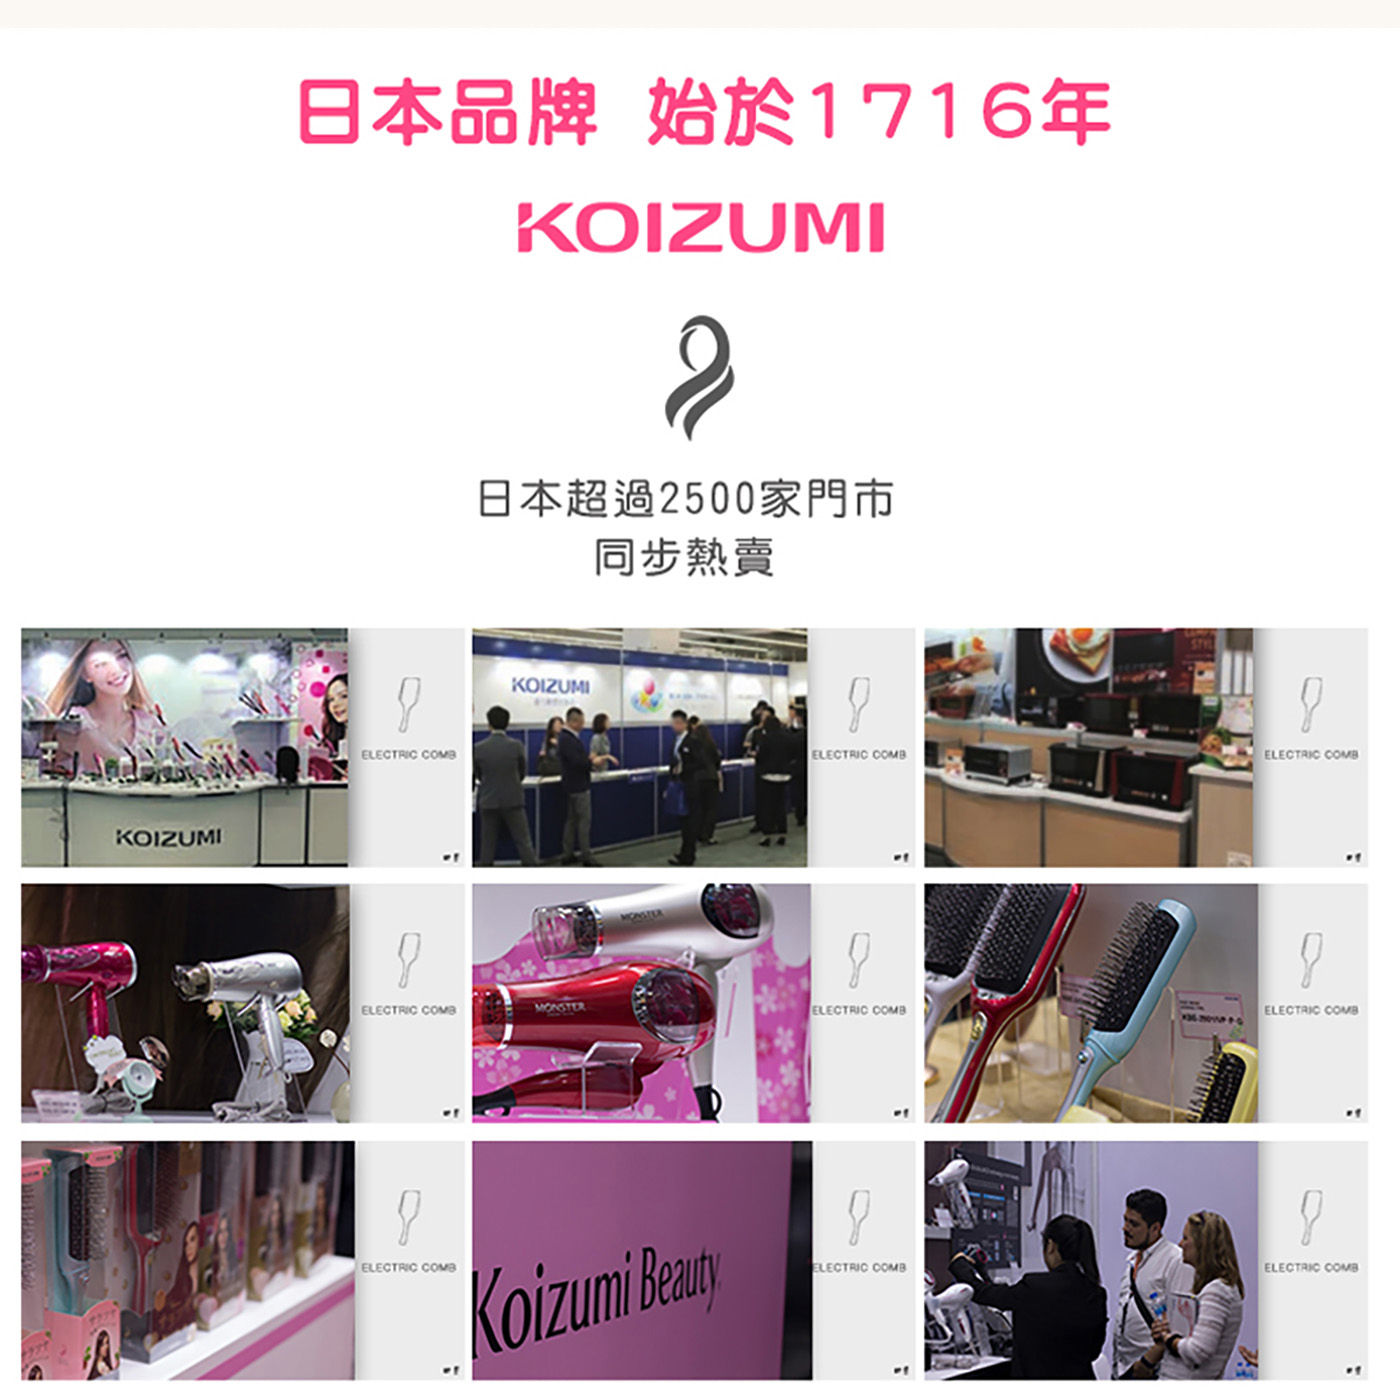 KOIZUMI 音波磁氣美髮梳日本品牌始於1716年日本超過2500家門市同步熱賣